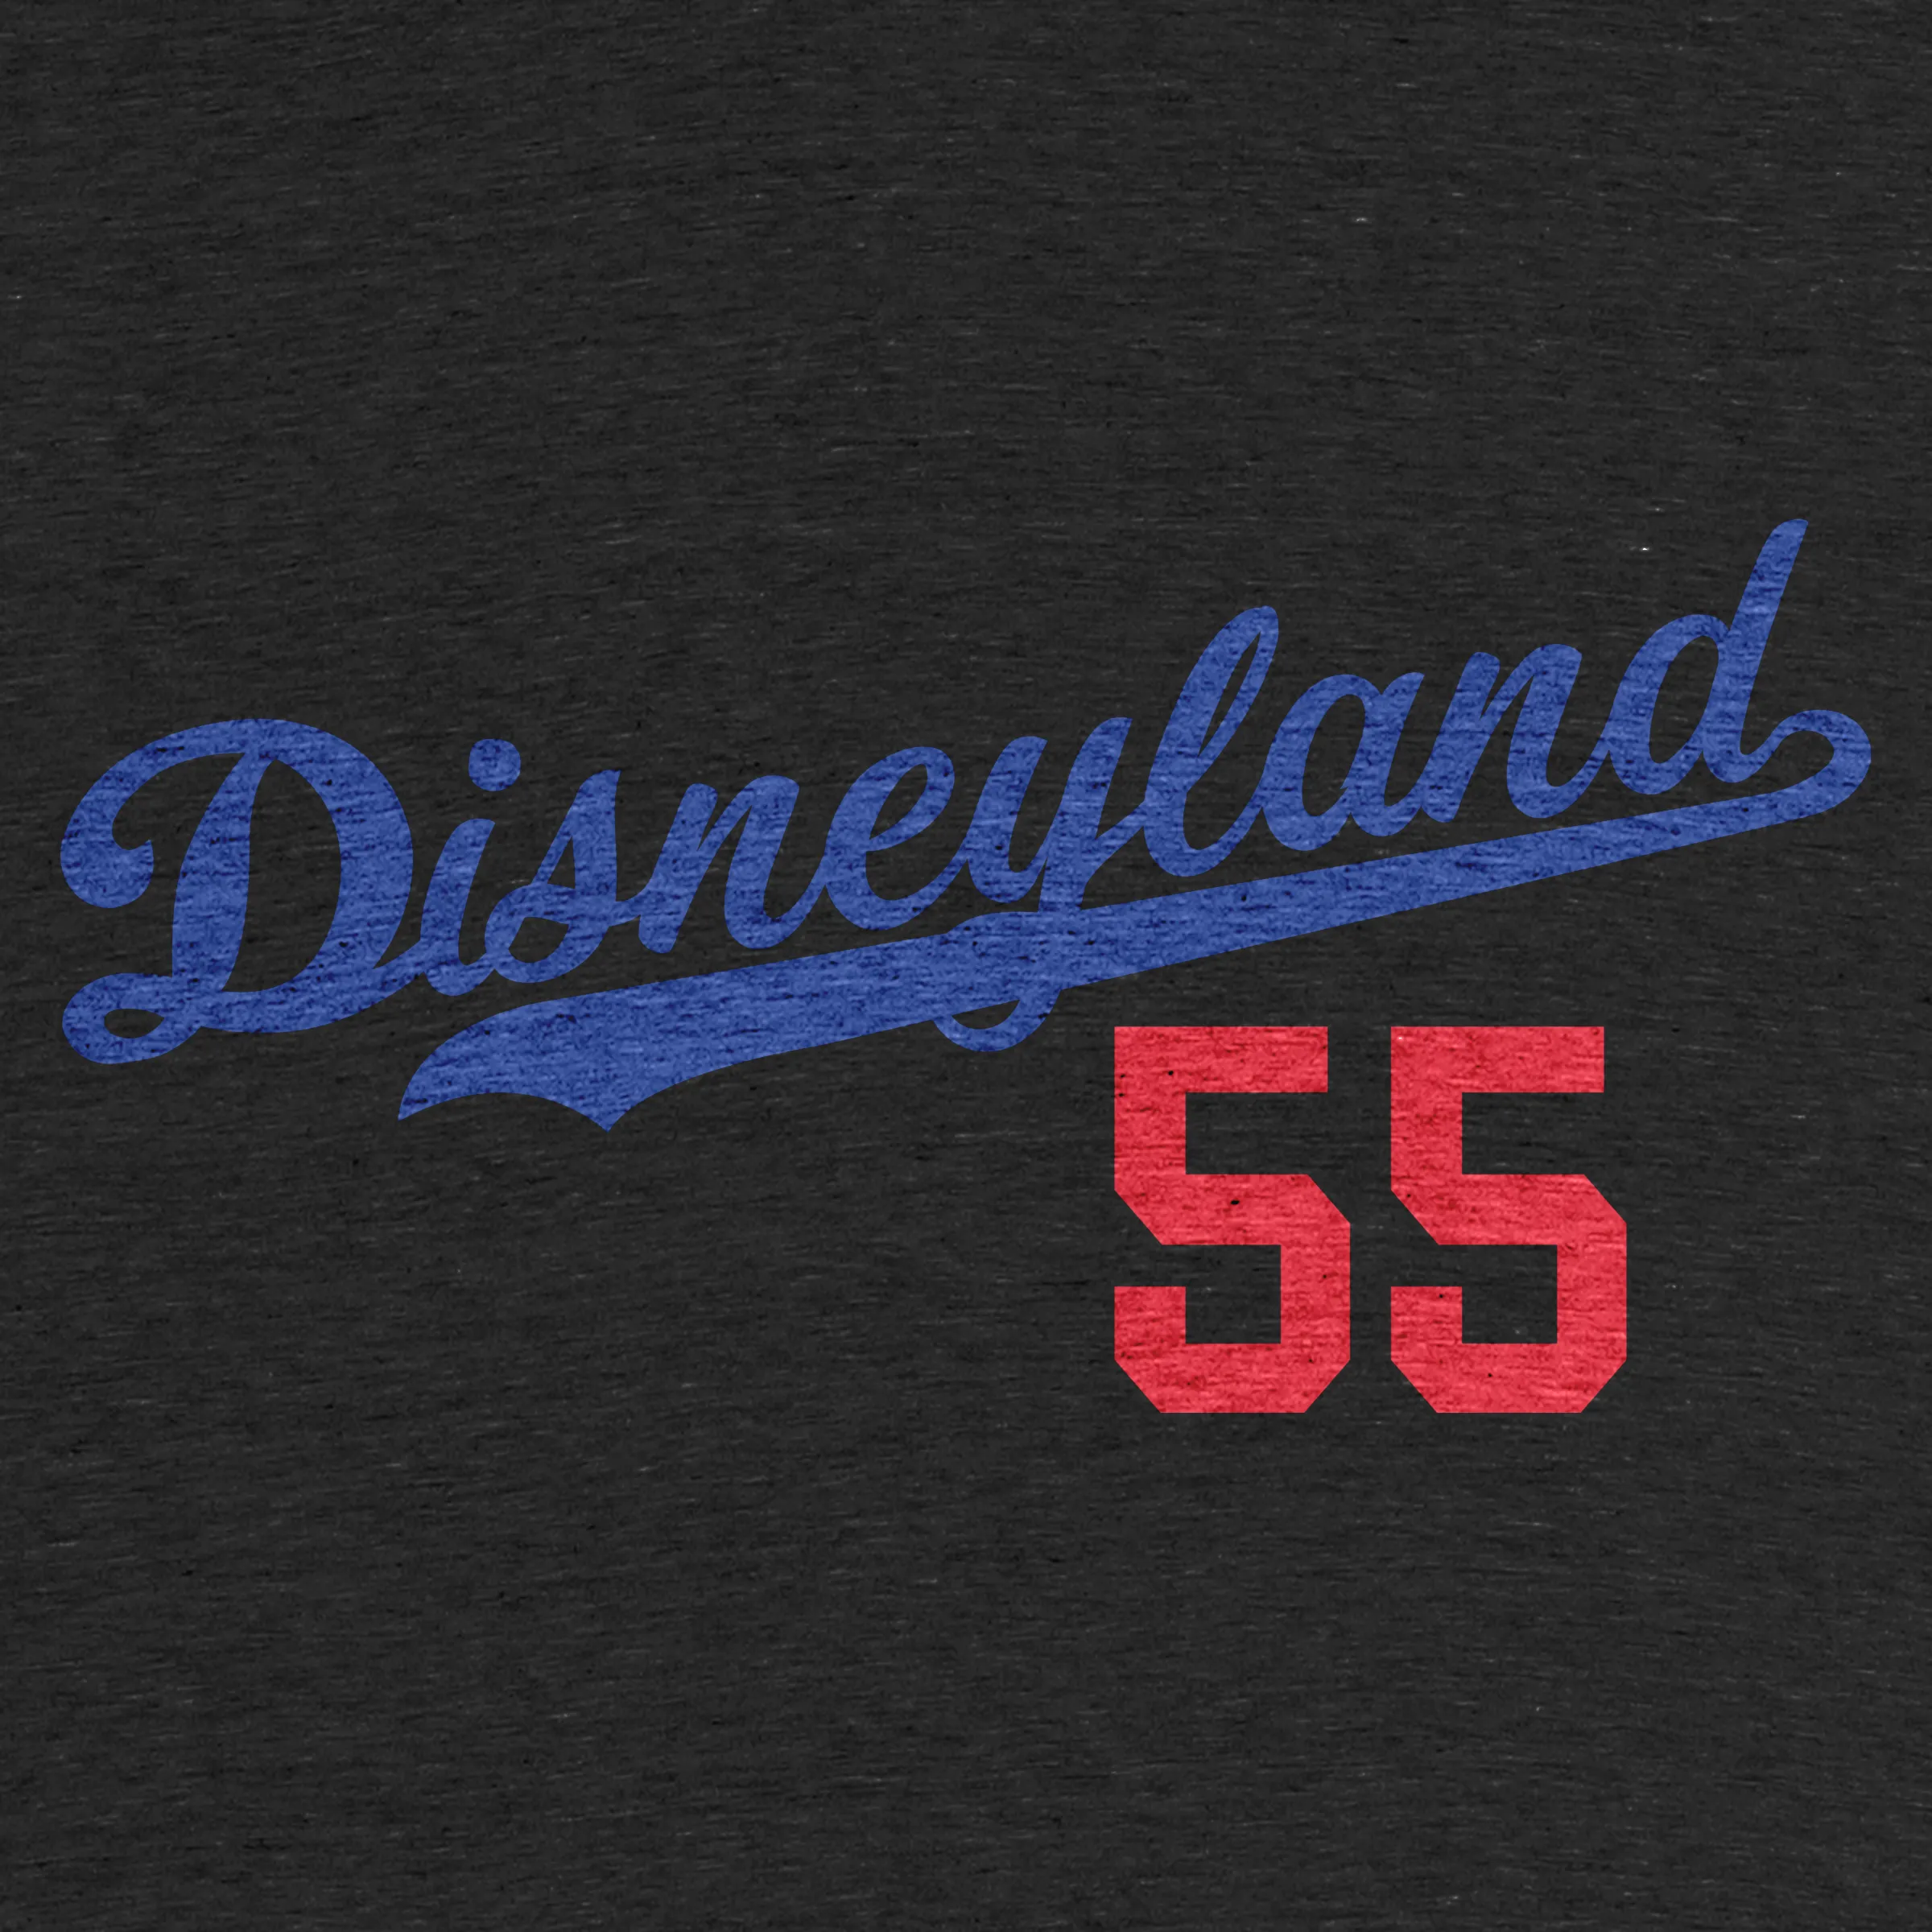 The Disneyland Dodgers 1955” graphic tee, pullover hoodie, tank